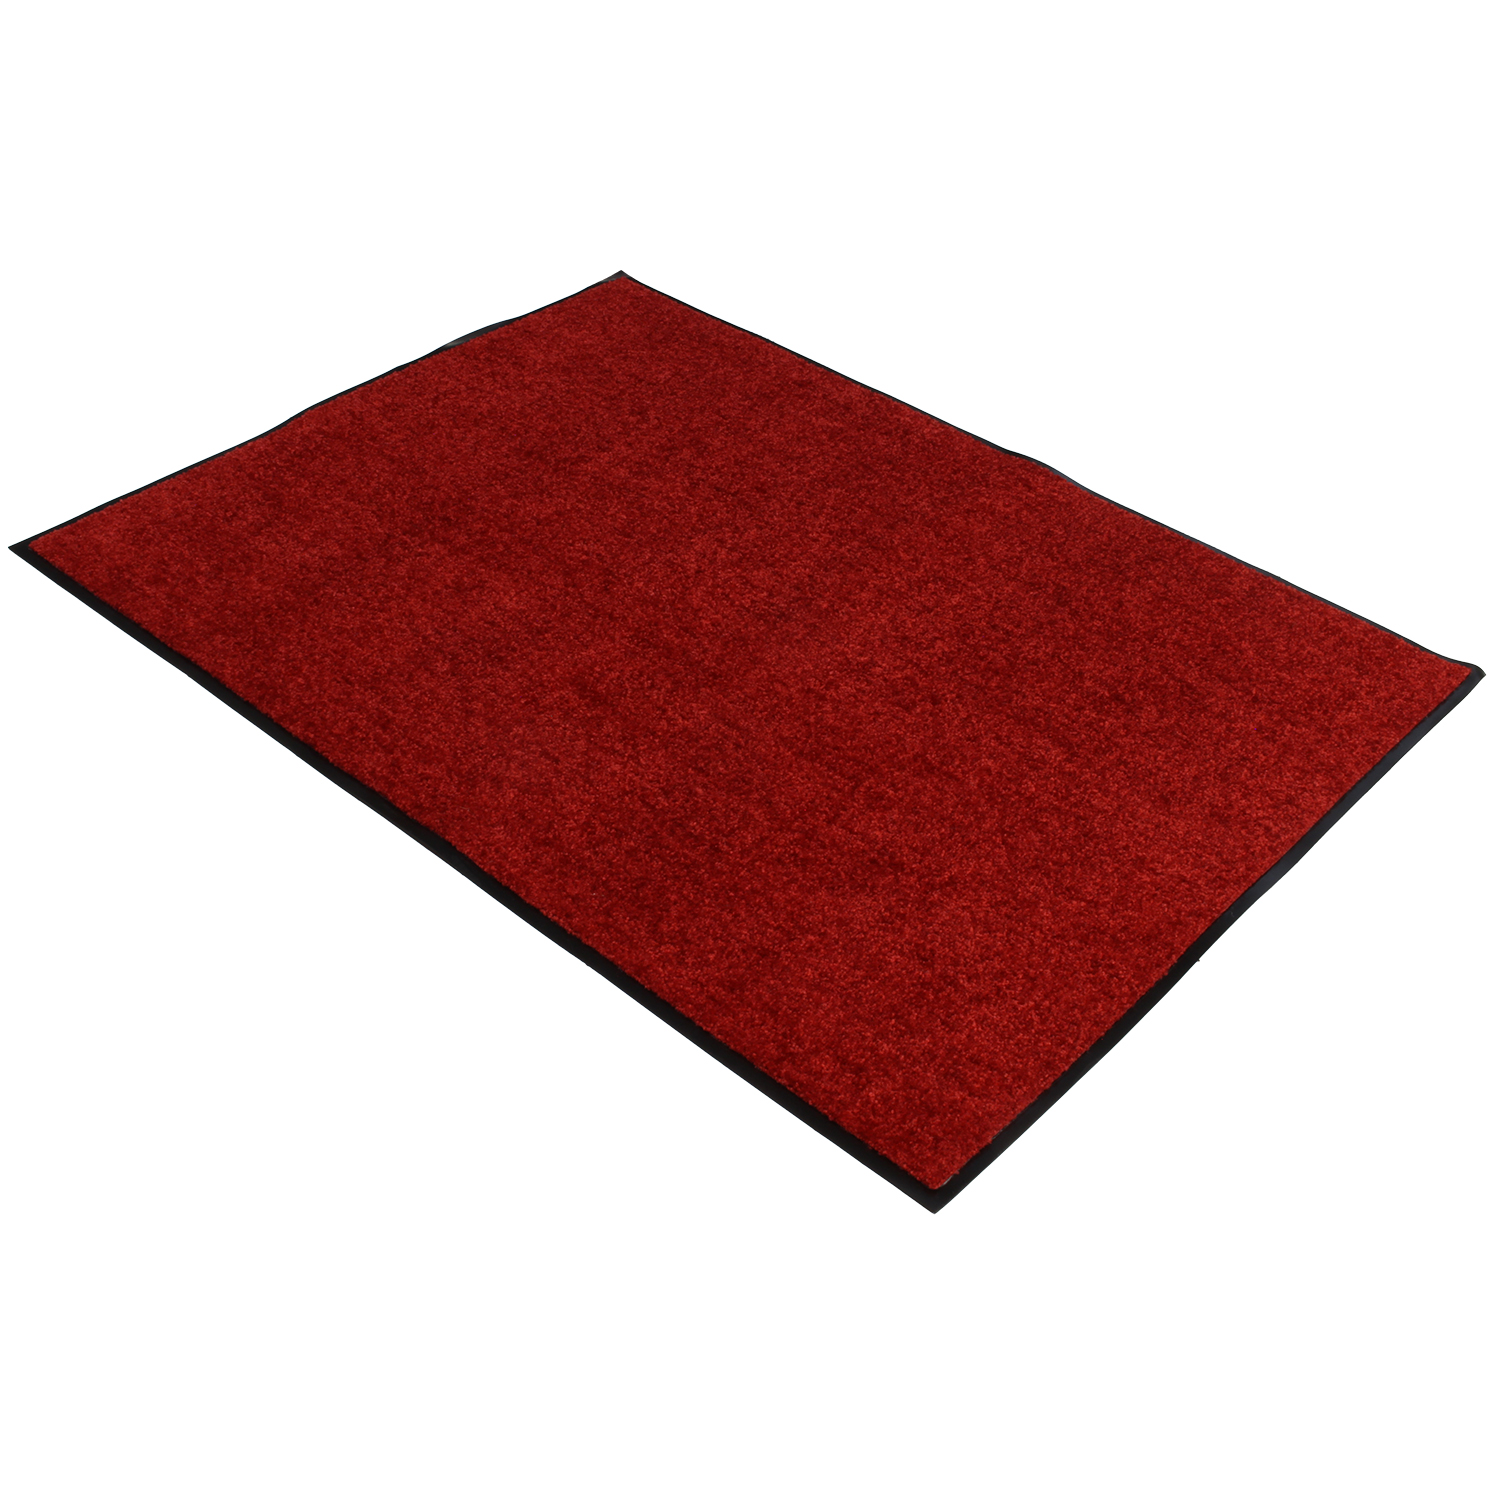 Droogloopmat - Rood - 90 x 150 cm - Rubberen onderrug - 1,5 cm rand - Wash & Clean